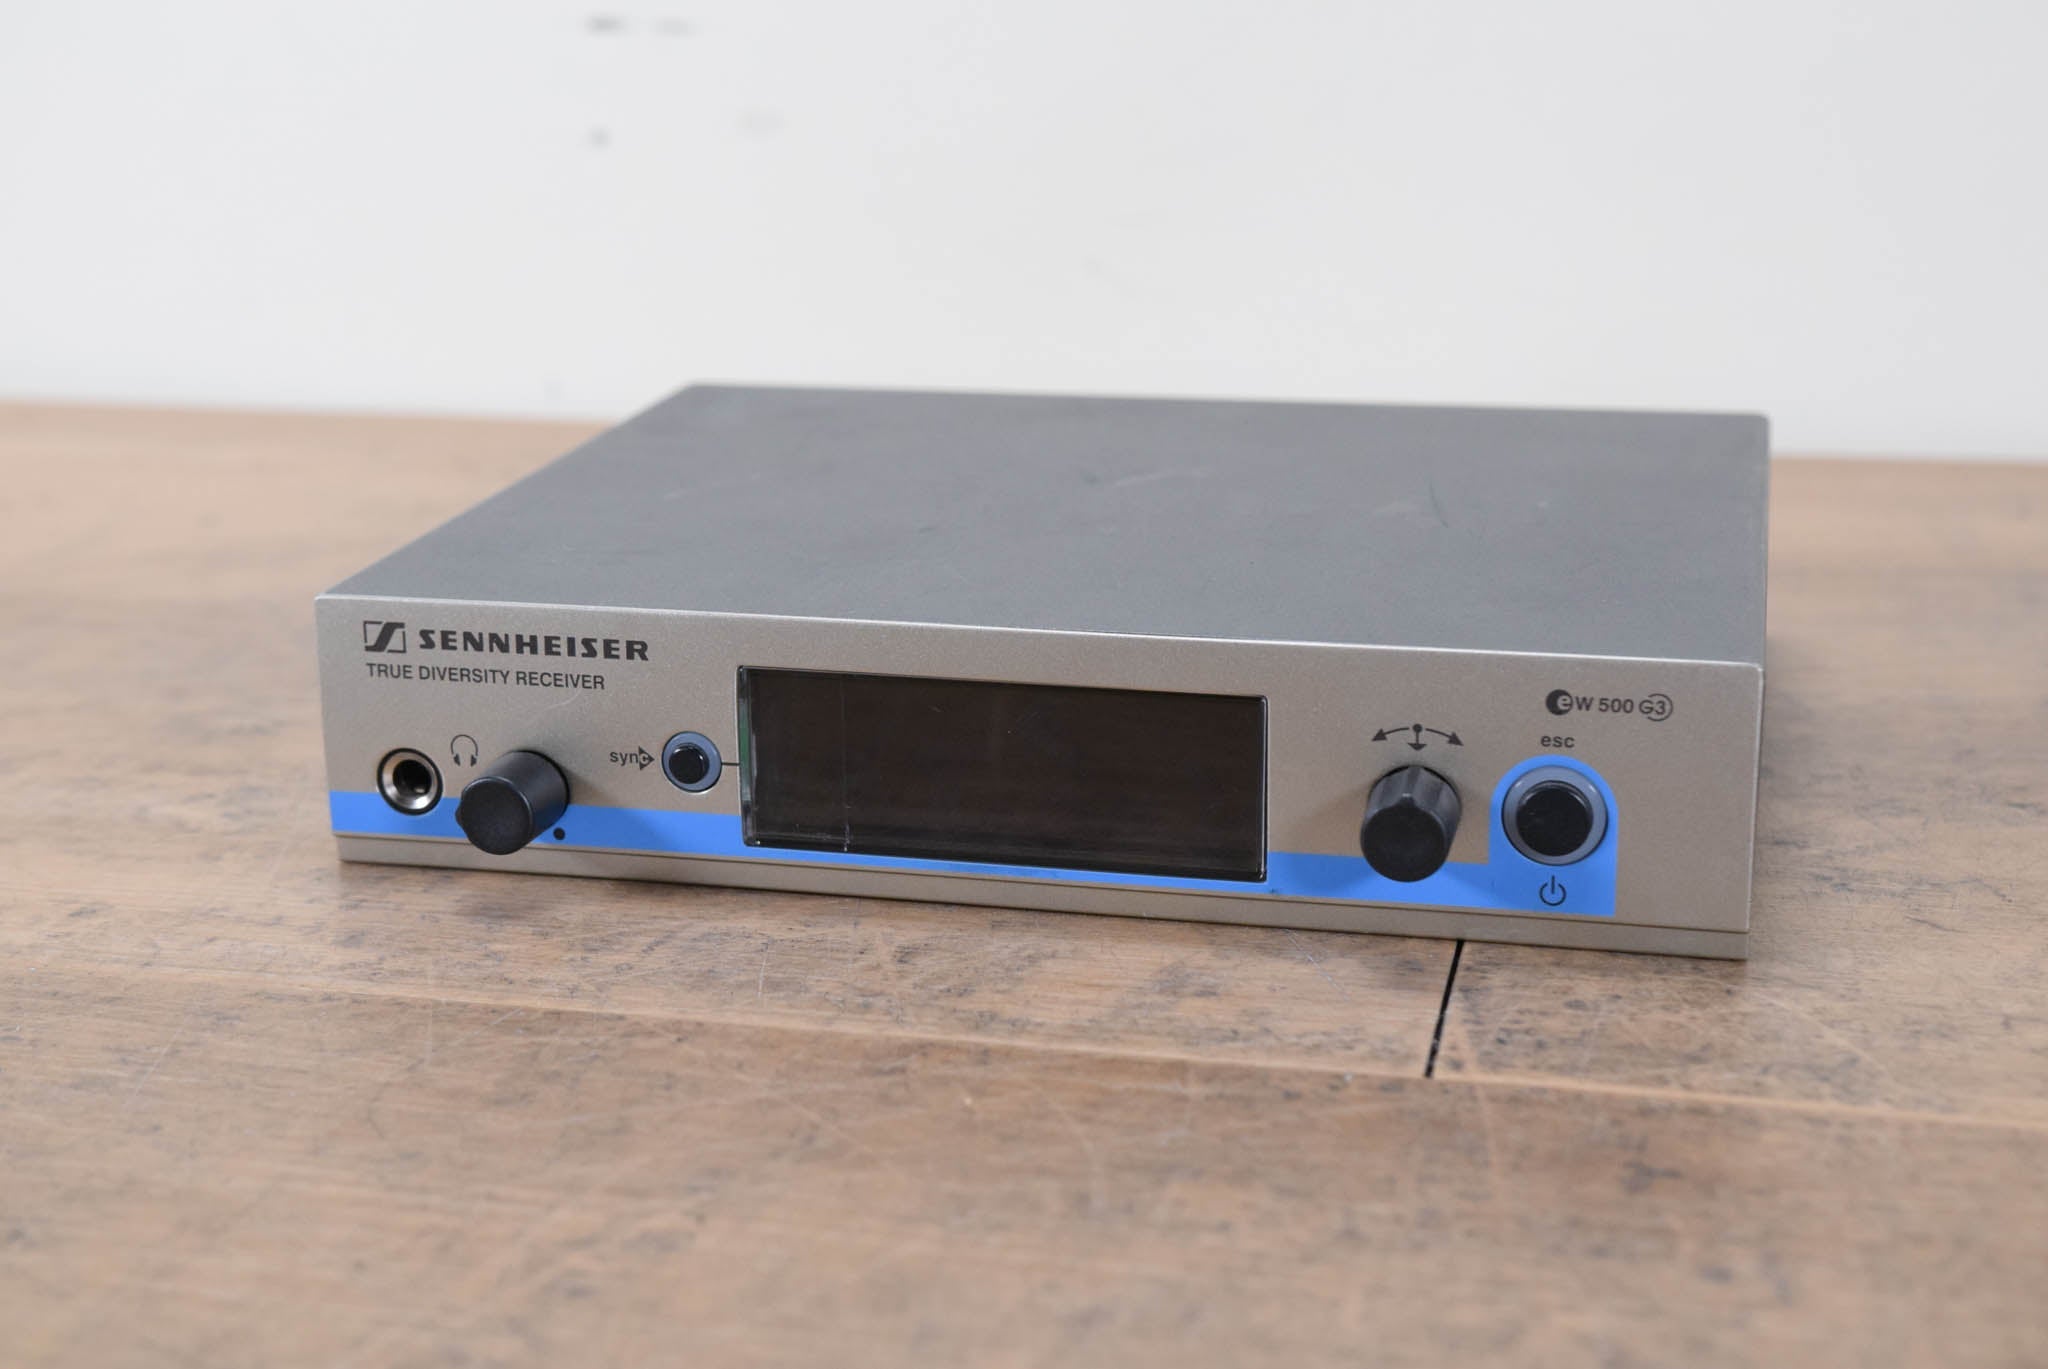 Sennheiser EM 500 G3 Wireless Receiver - 516-558 MHz (NO POWER SUPPLY)